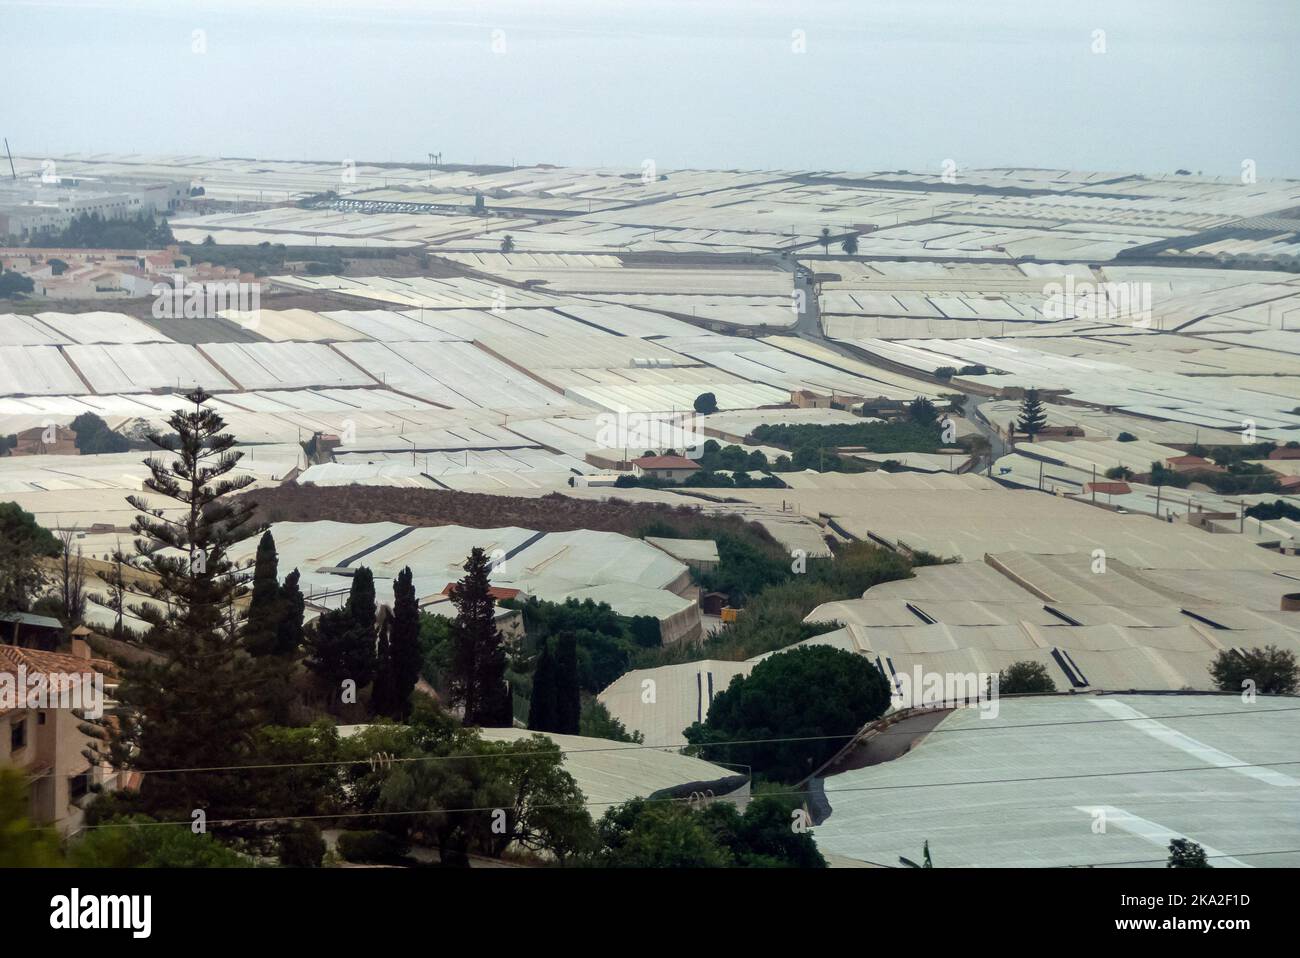 Almeria in Spain: Plastic greenhouses (invernaderos) in the El Ejido region Stock Photo